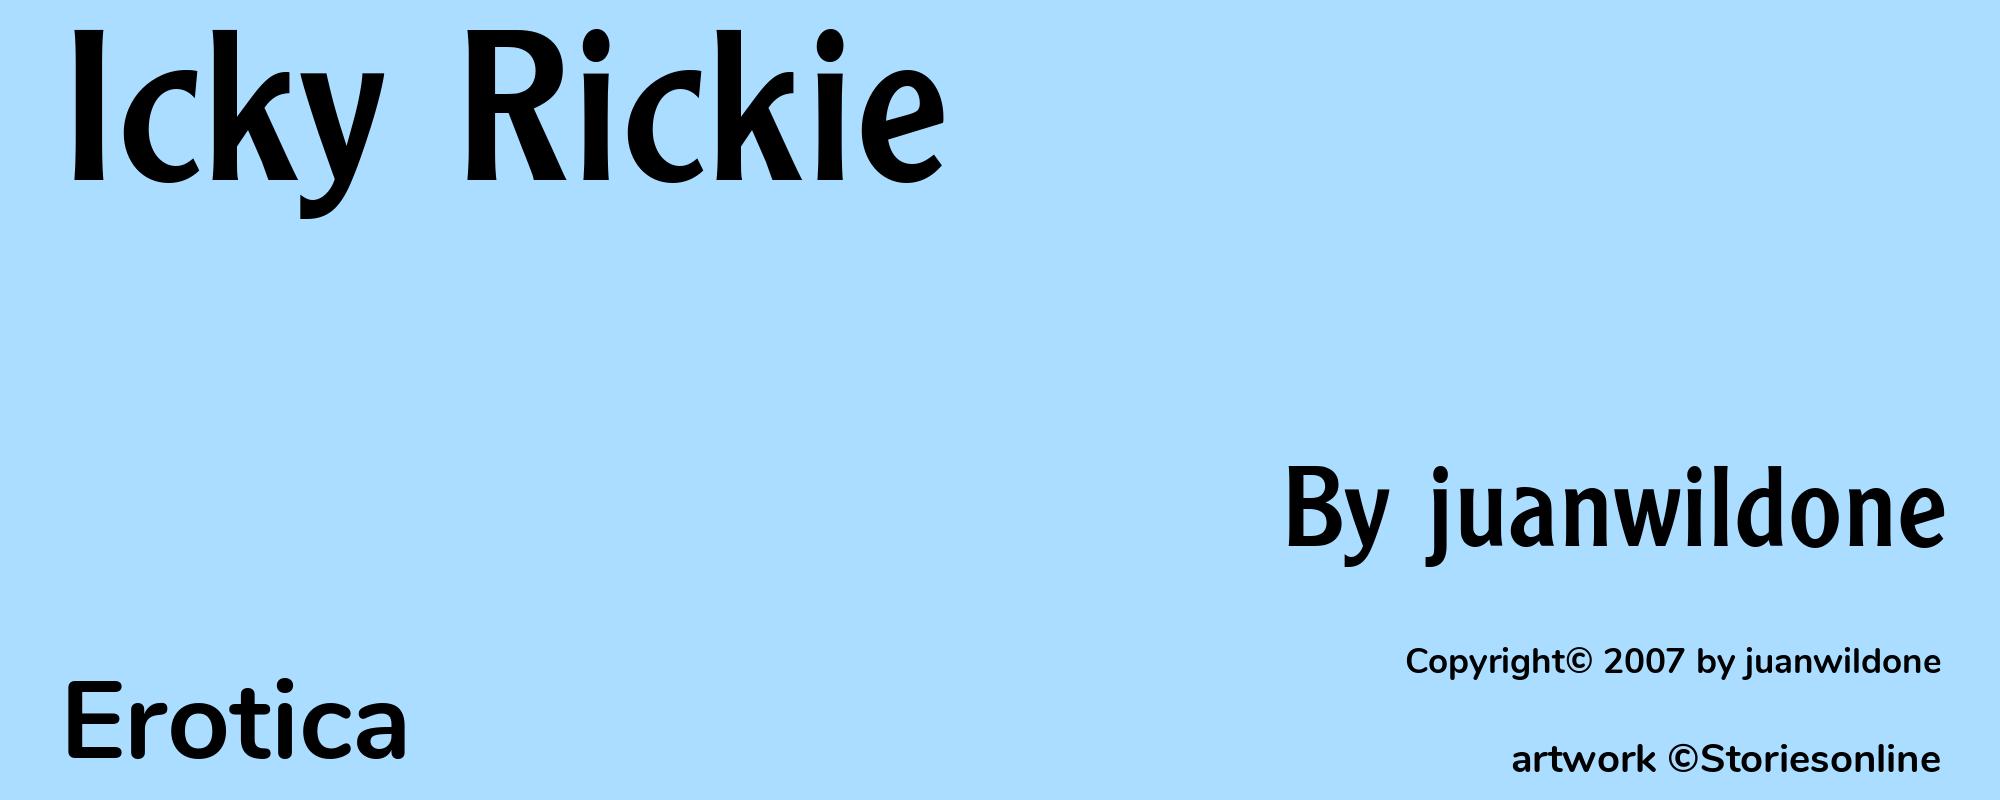 Icky Rickie - Cover